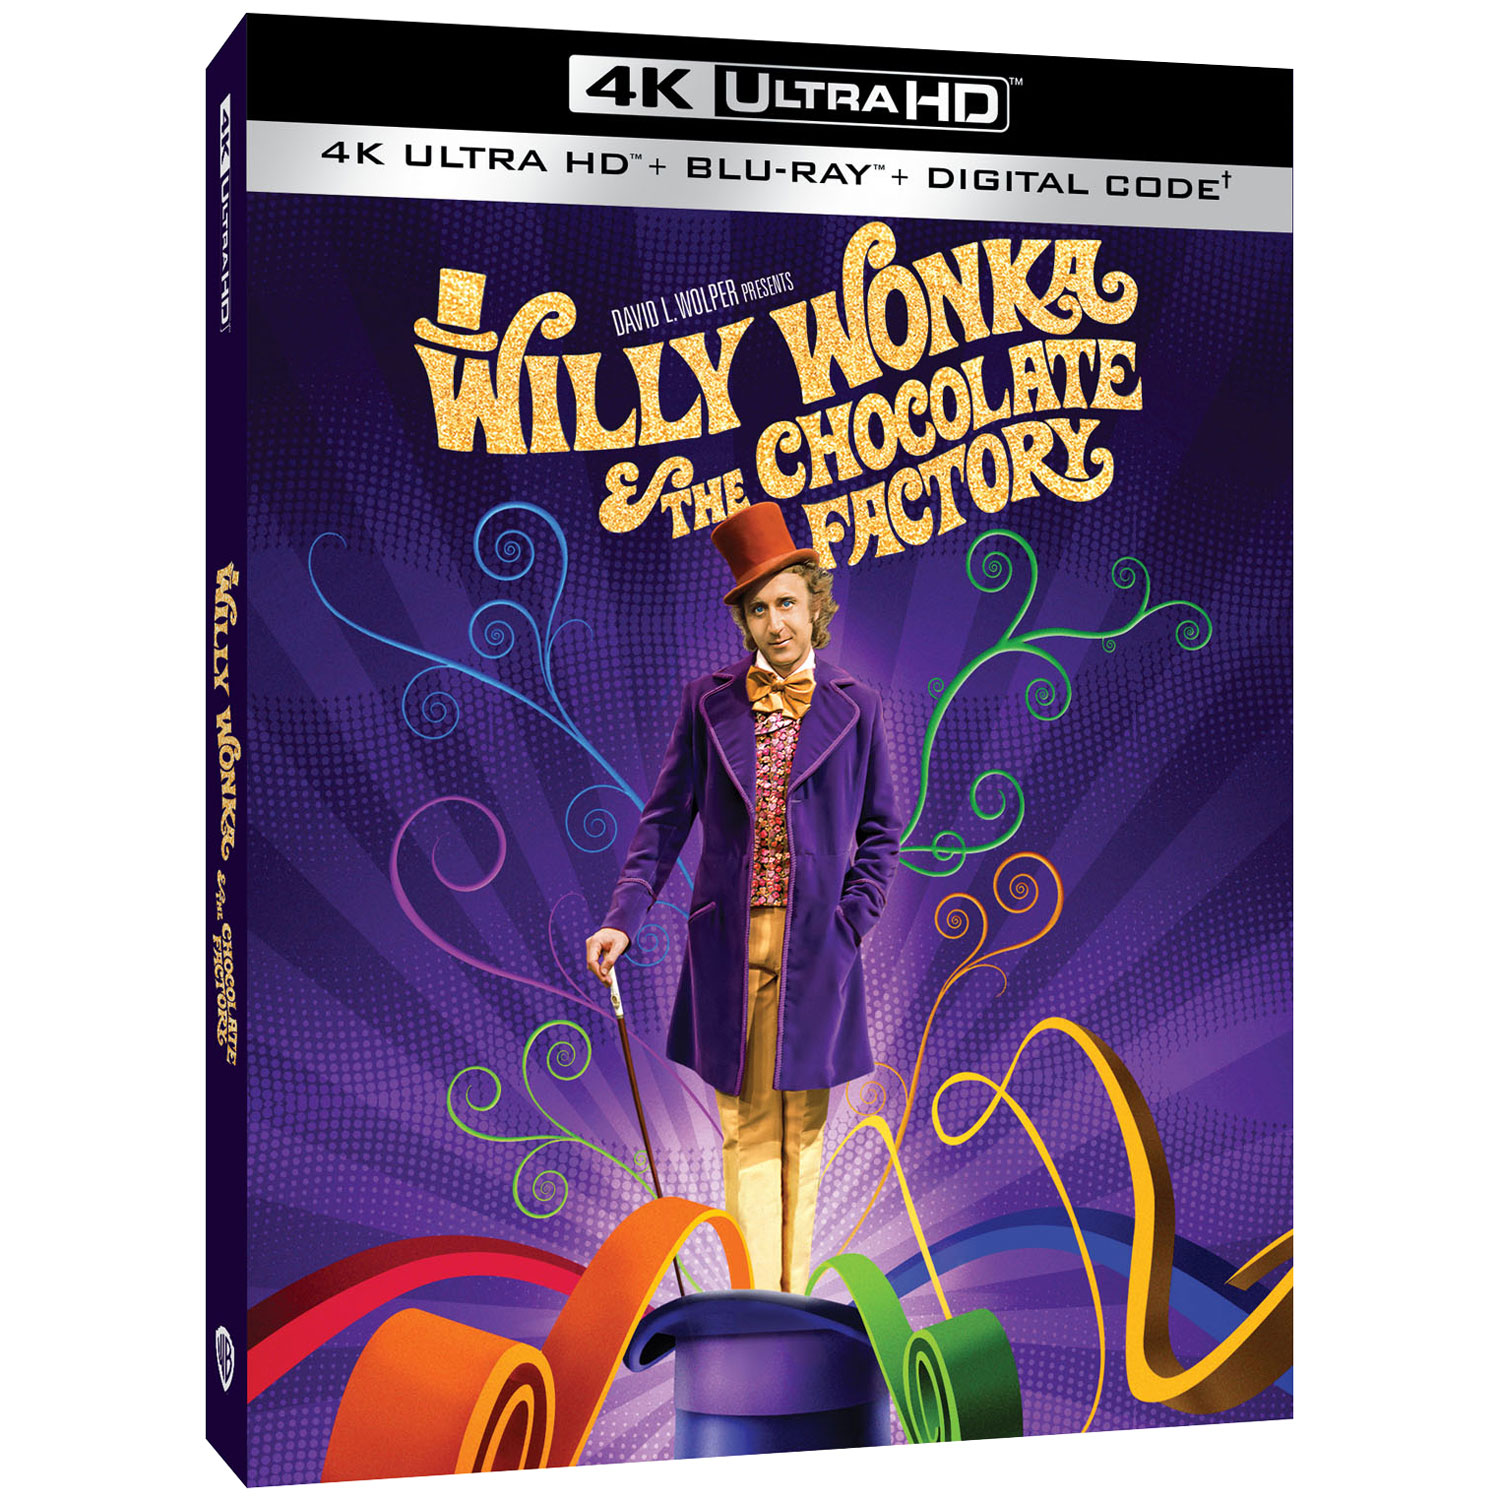 Willy Wonka & the Chocolate Factory (English) (4K Ultra HD) (Blu-ray Combo)